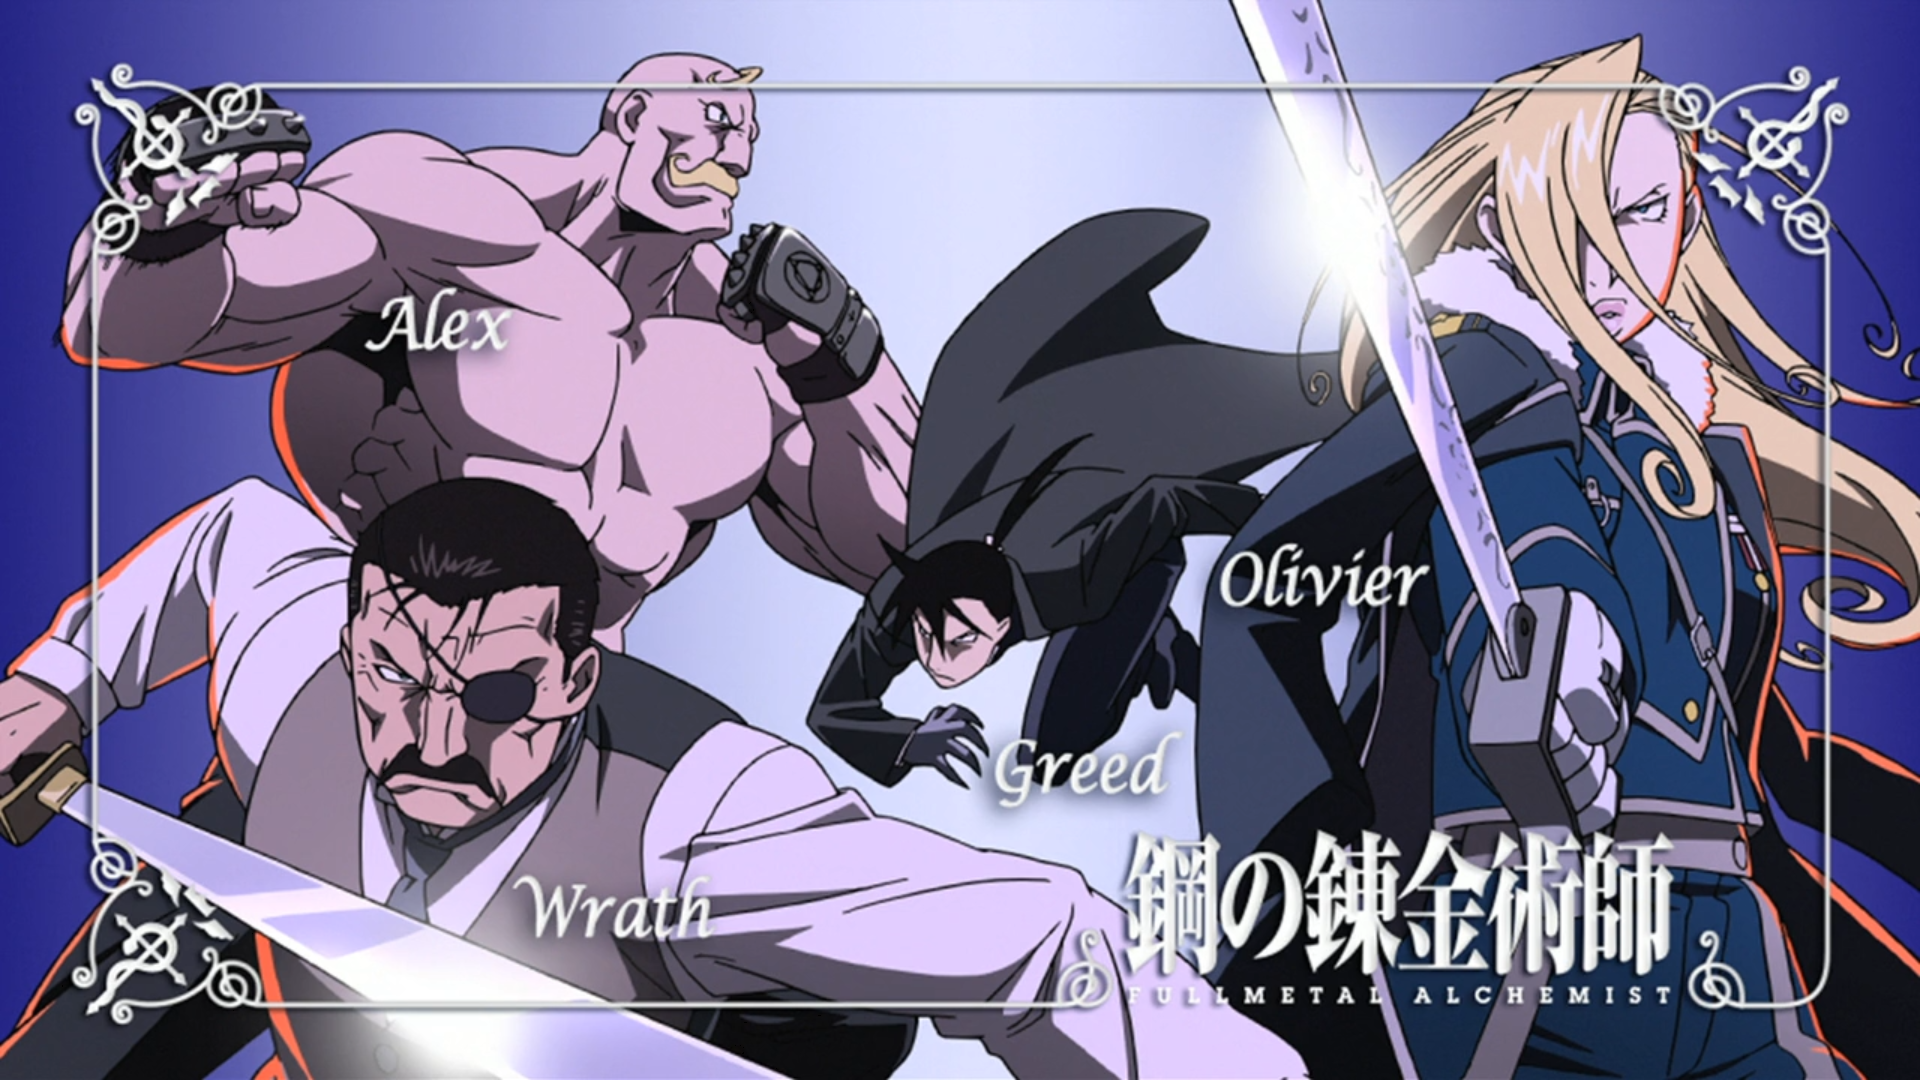 Anime 1920x1080 Fullmetal Alchemist: Brotherhood anime anime men anime girls women with swords sword weapon eyepatches